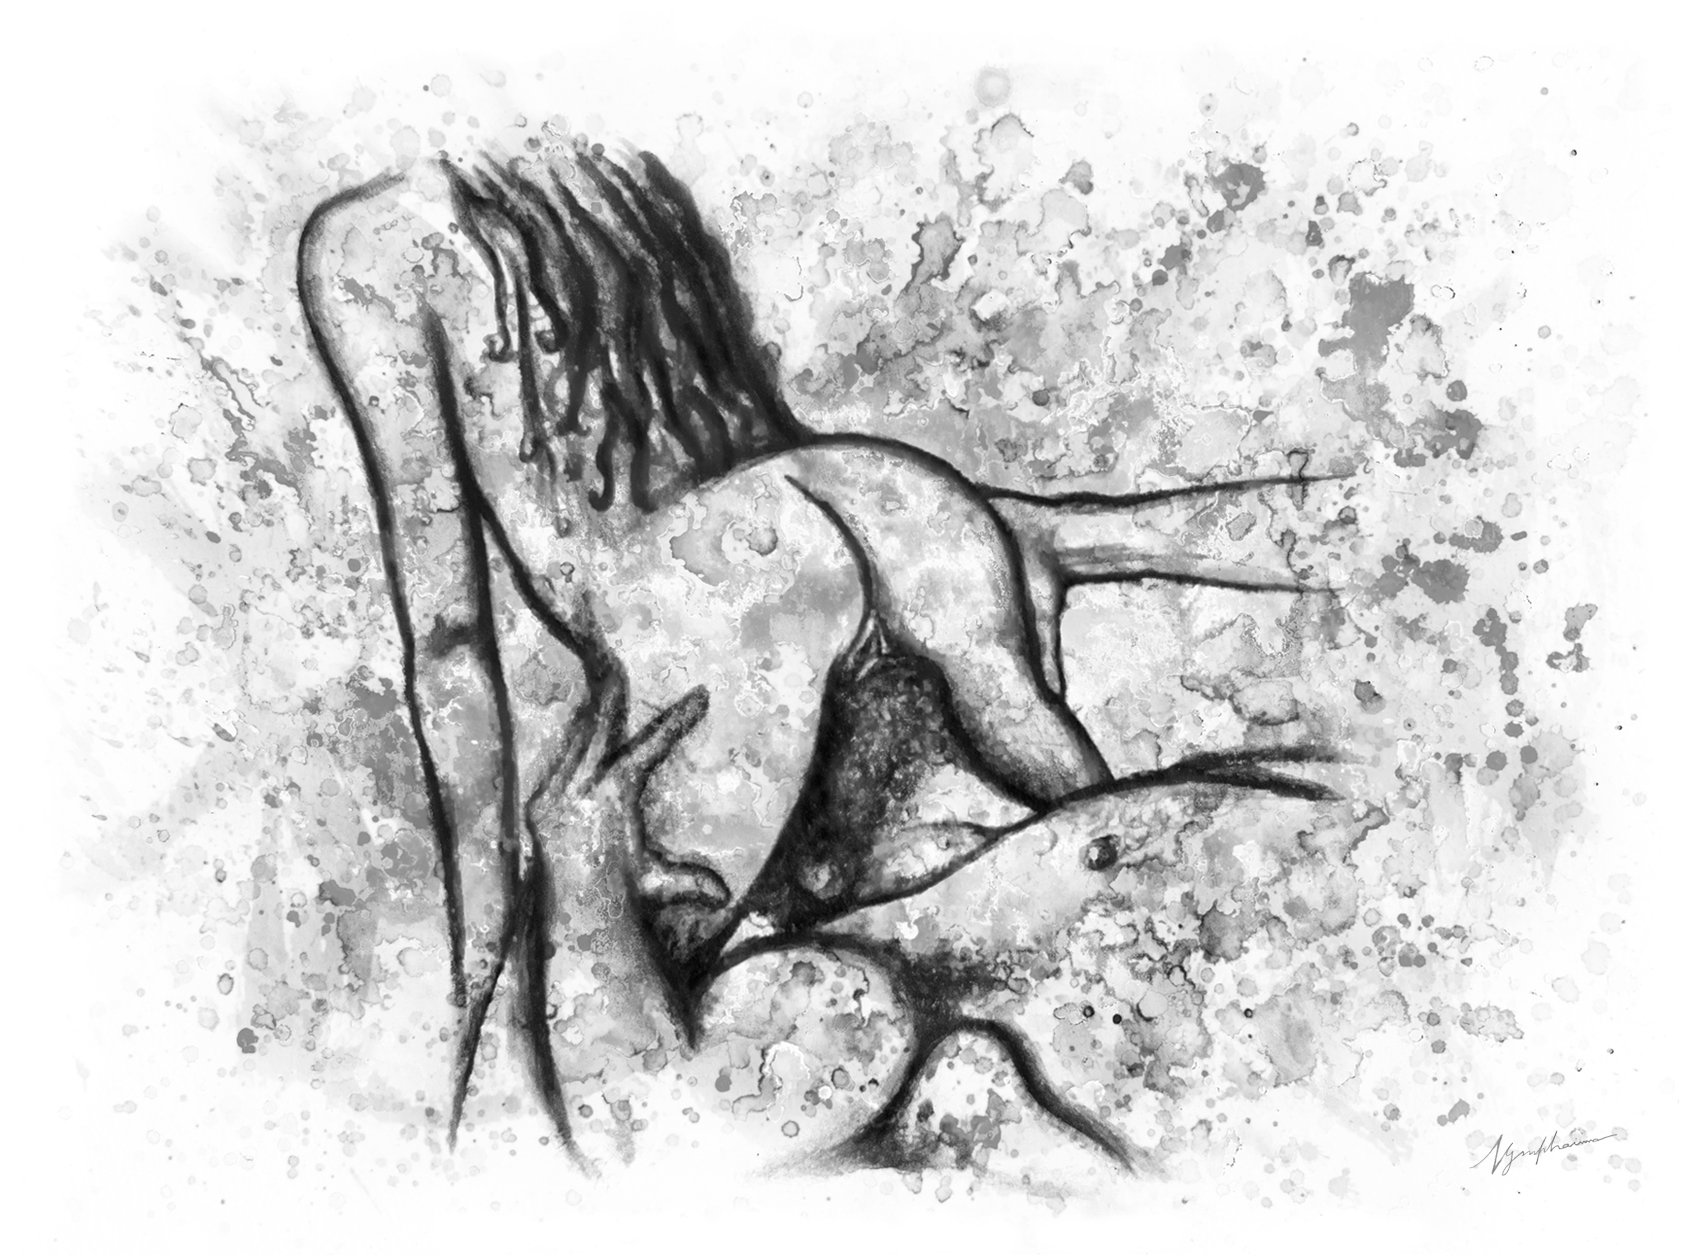 Nymphainna on X: Hot Breakfast #eroticart #erotic #sex #sexual #erotica  #blackandwhite #art #arte #illustration #drawing #nude #mature #oralsex  #oral #sexy #sensual #hot #pleasure #climax #intimacy #fuck #fucking  #goodporn #porn #ass #butt #artist #